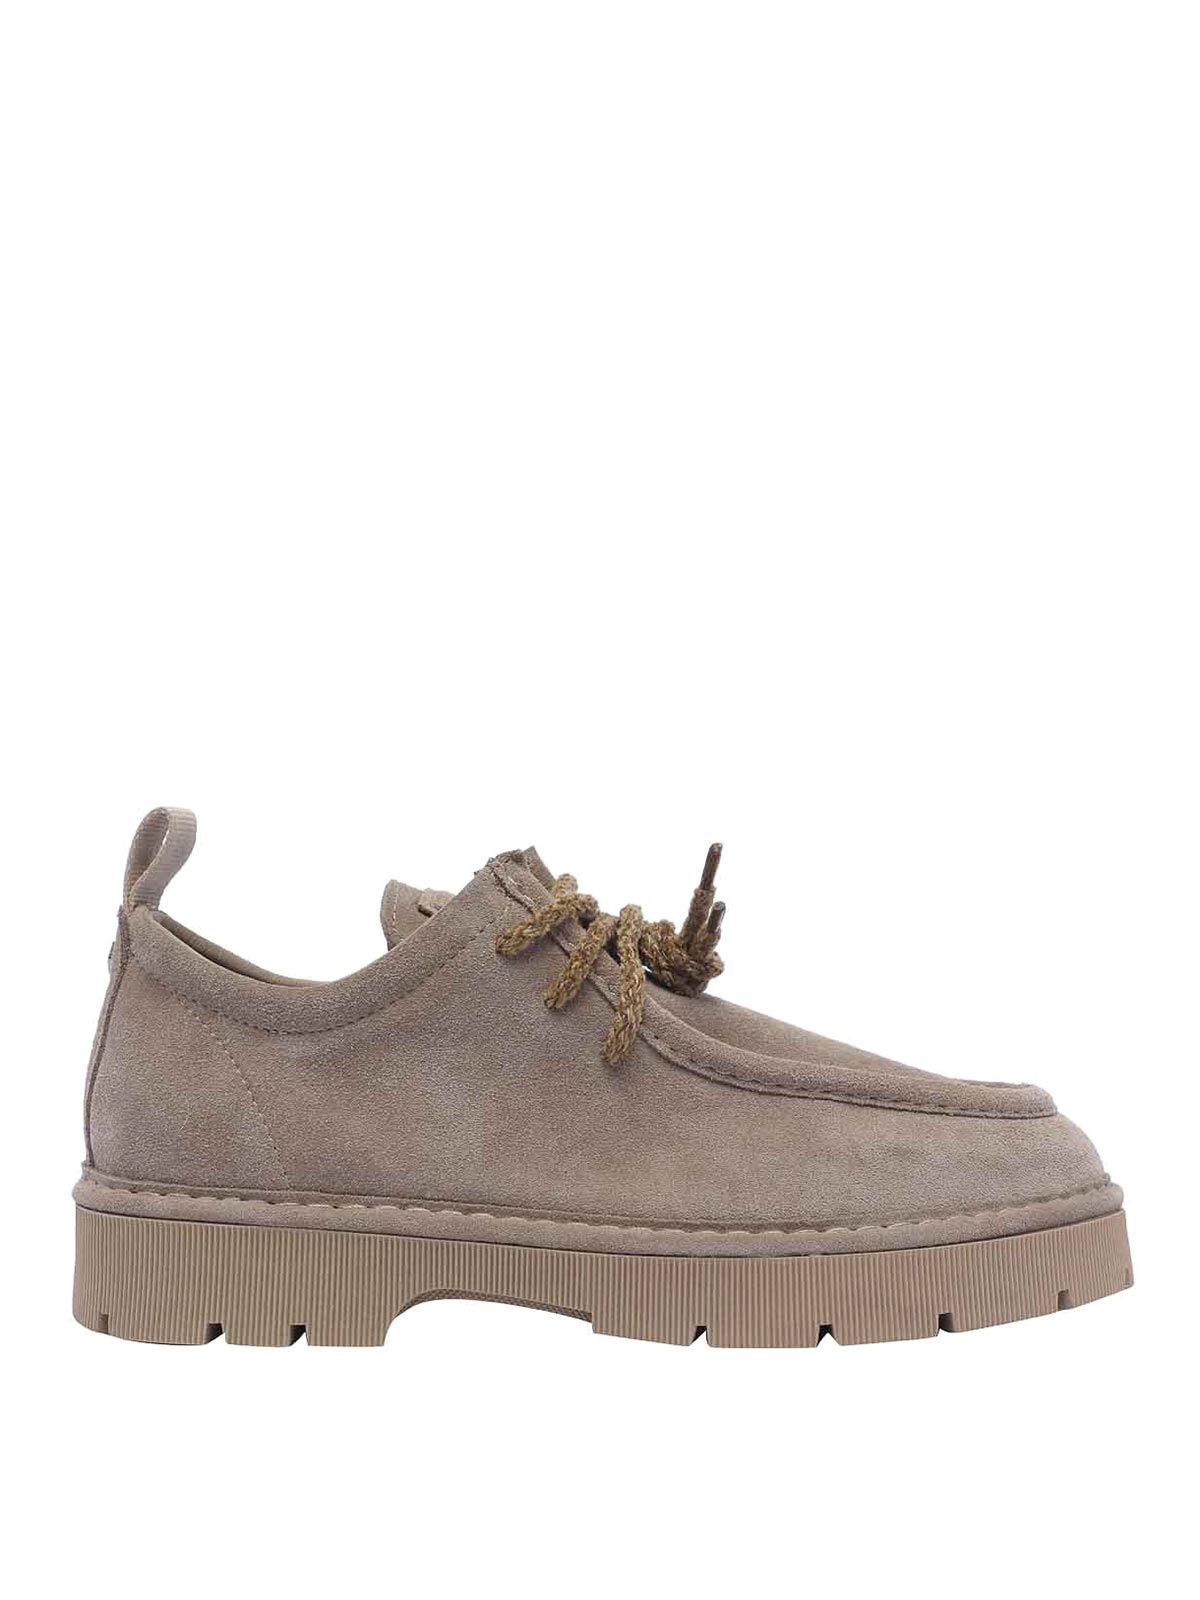 Shop Pànchic Zapatos Clásicos - P99 In Grey